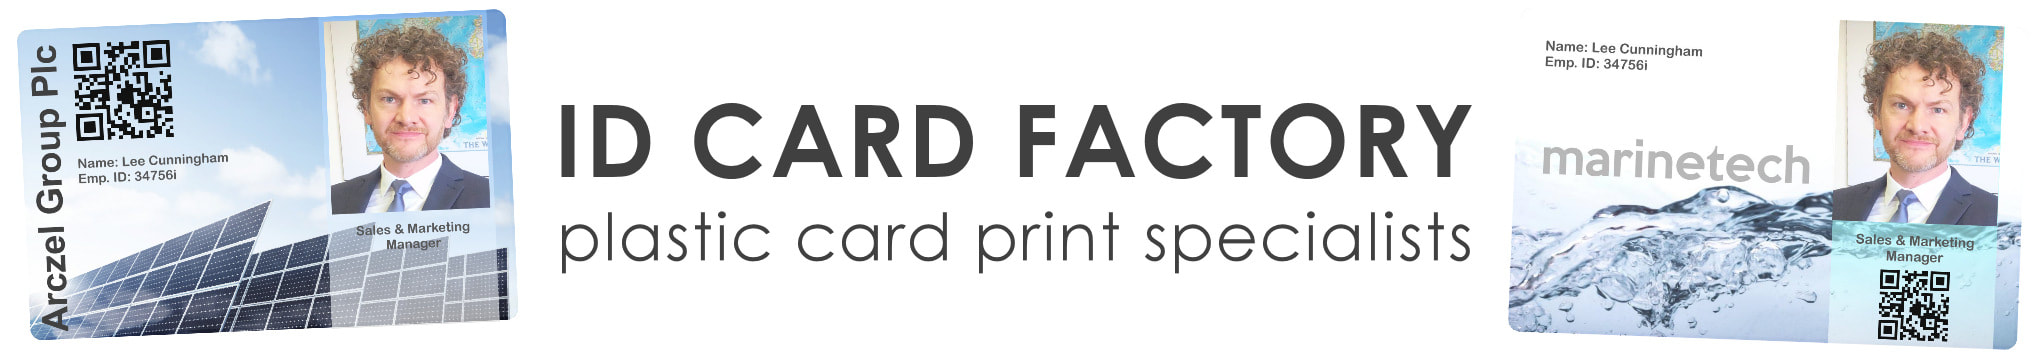 Chester ID card printing | staff photo ID cards | company employee ID card print service | Local Identity Card Printing | Custom Design 